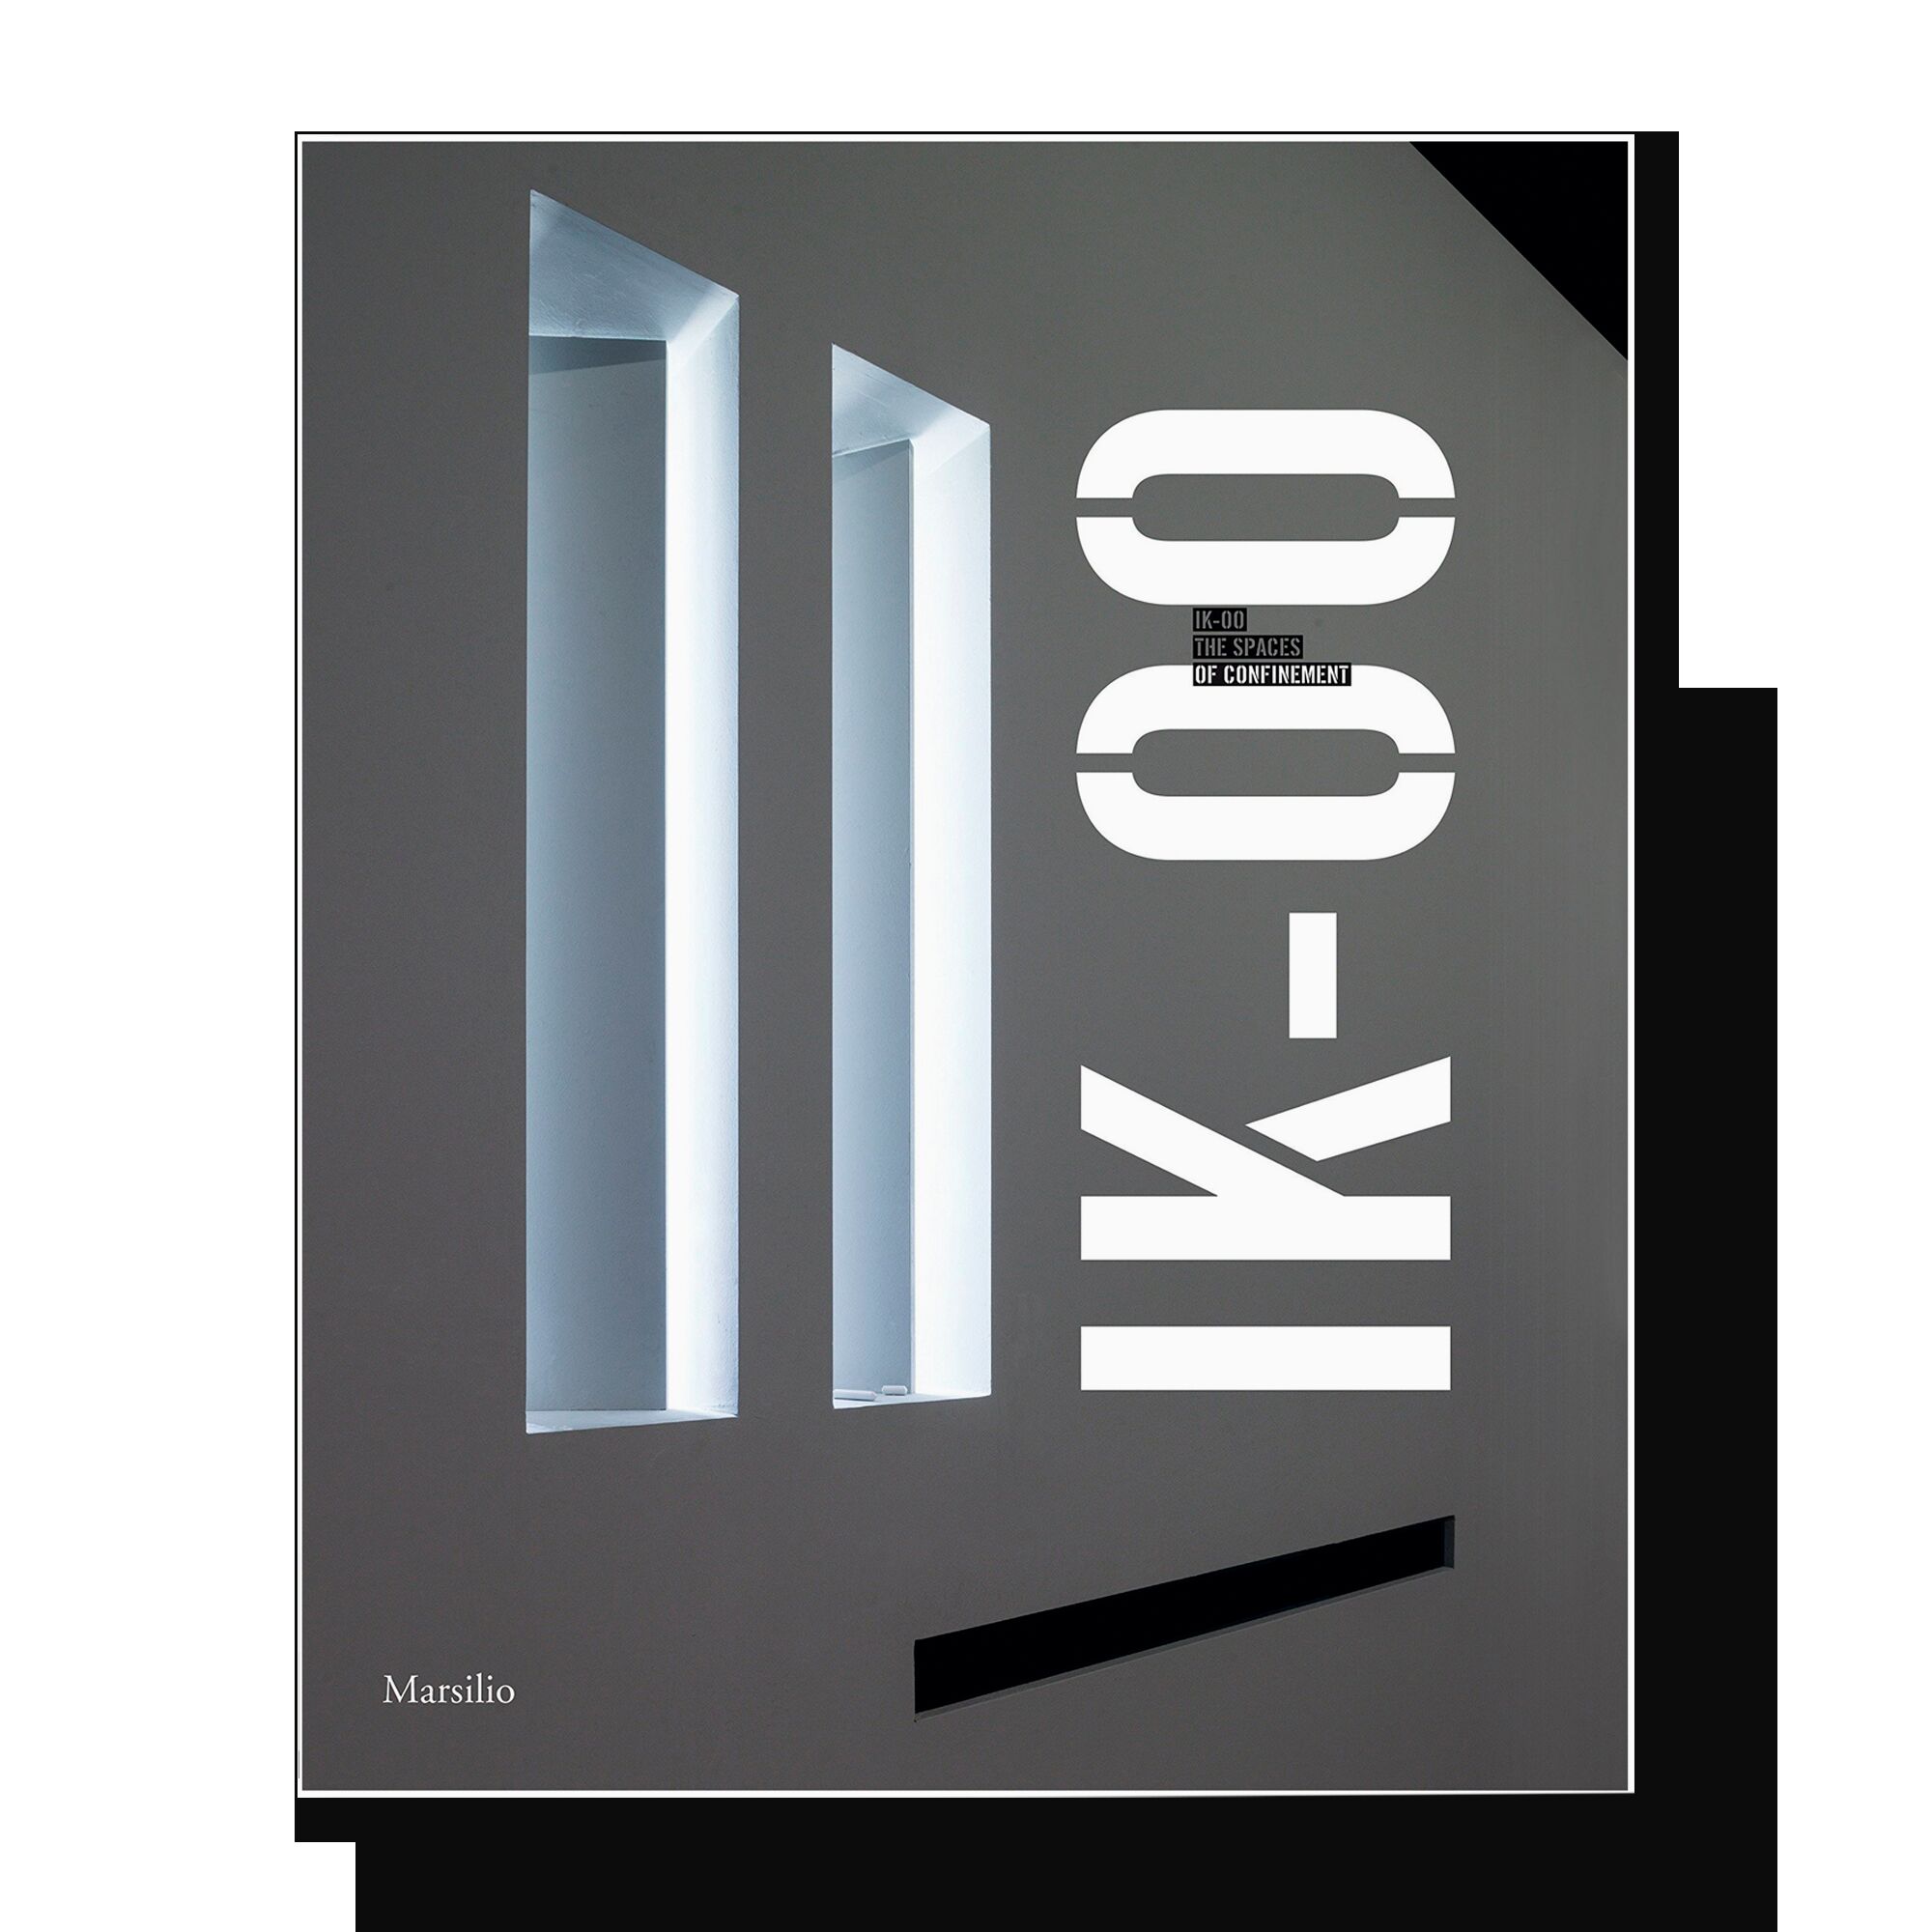 IK-00 The Spaces of Confinement 2015